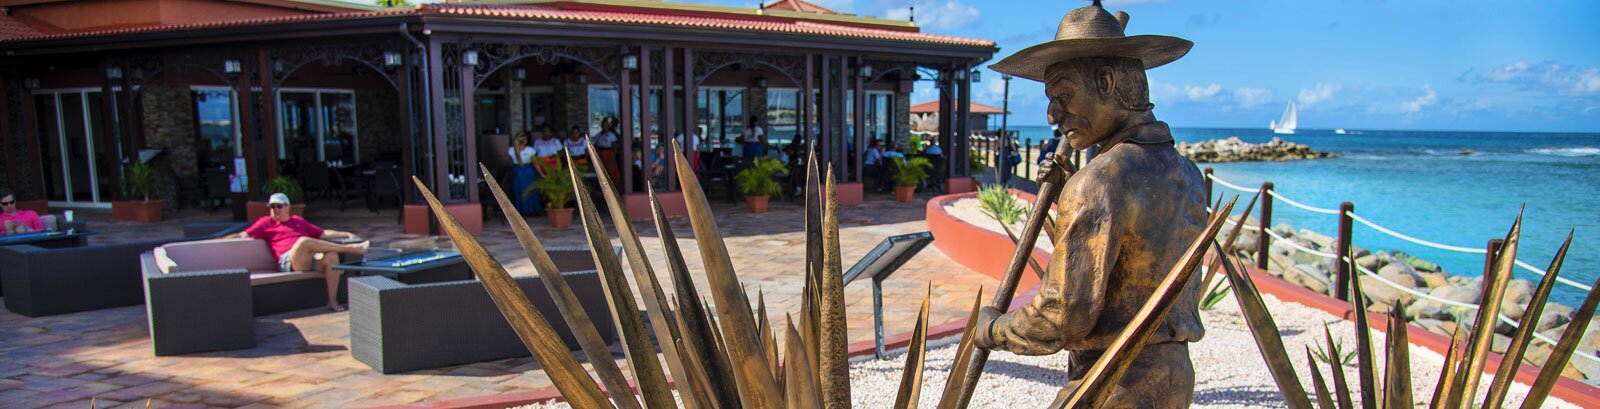 Restaurant La Patrona - Nos recommandations au Simpson Bay Resort